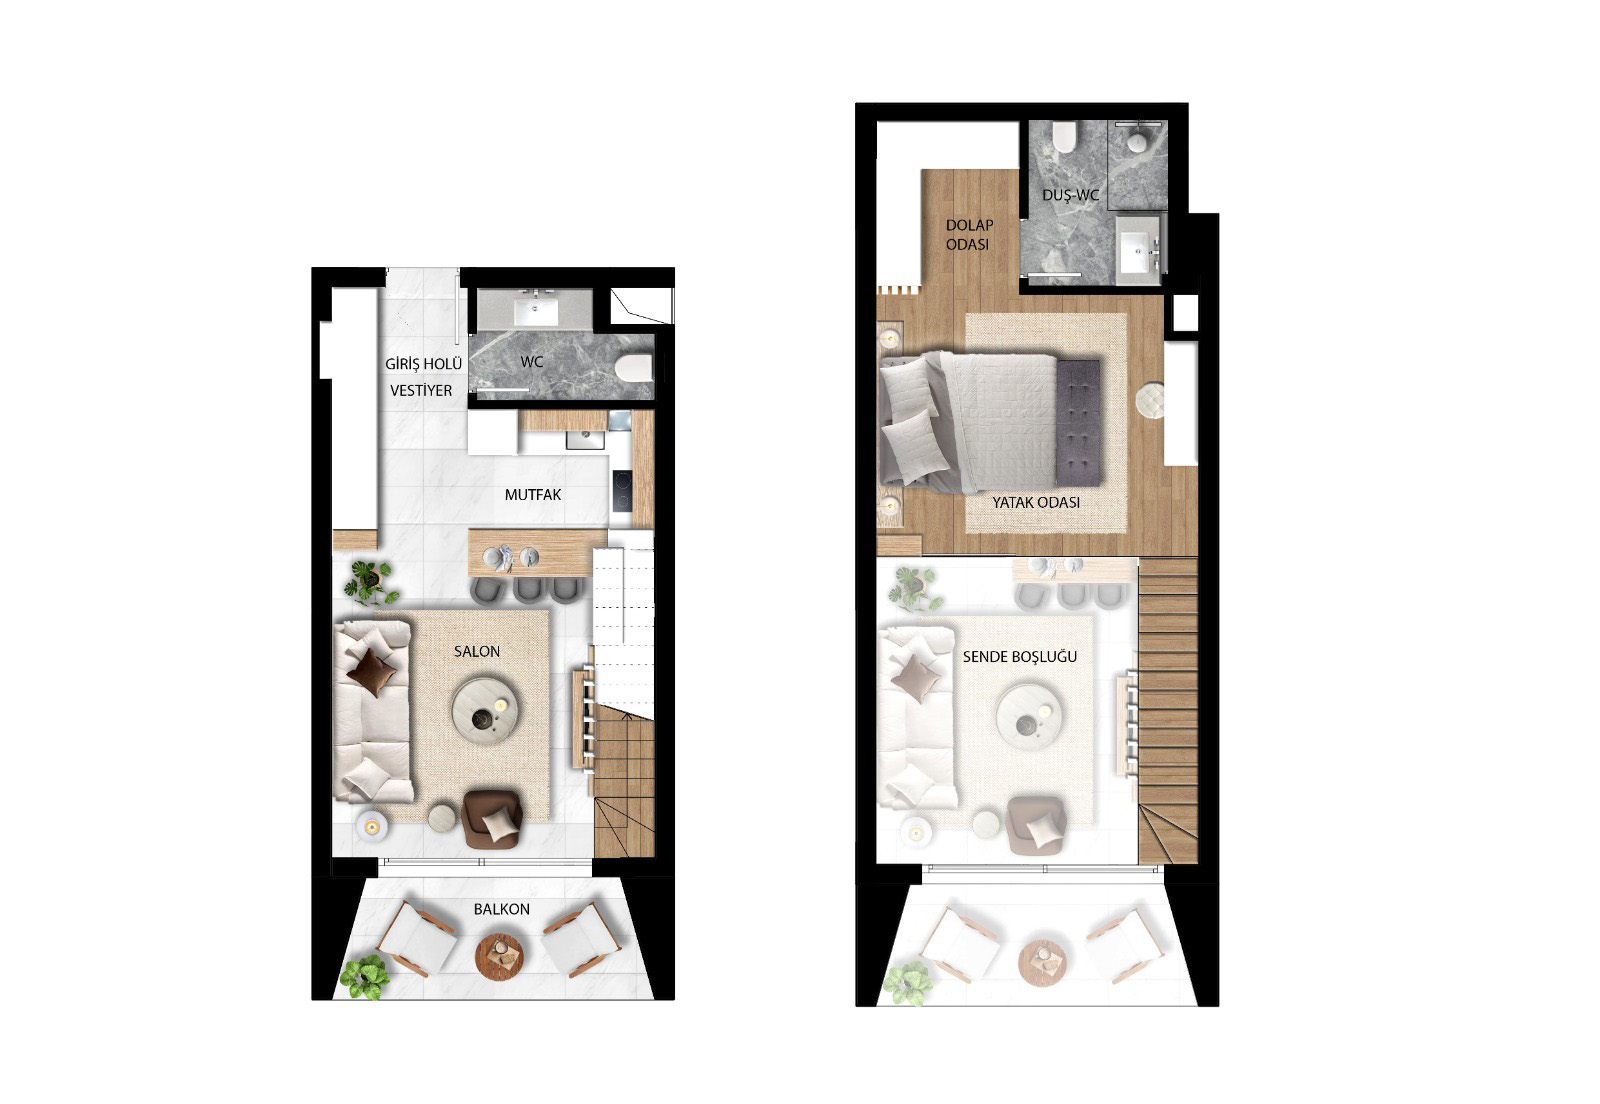 Planritning - Duplex takvåning med ett sovrum